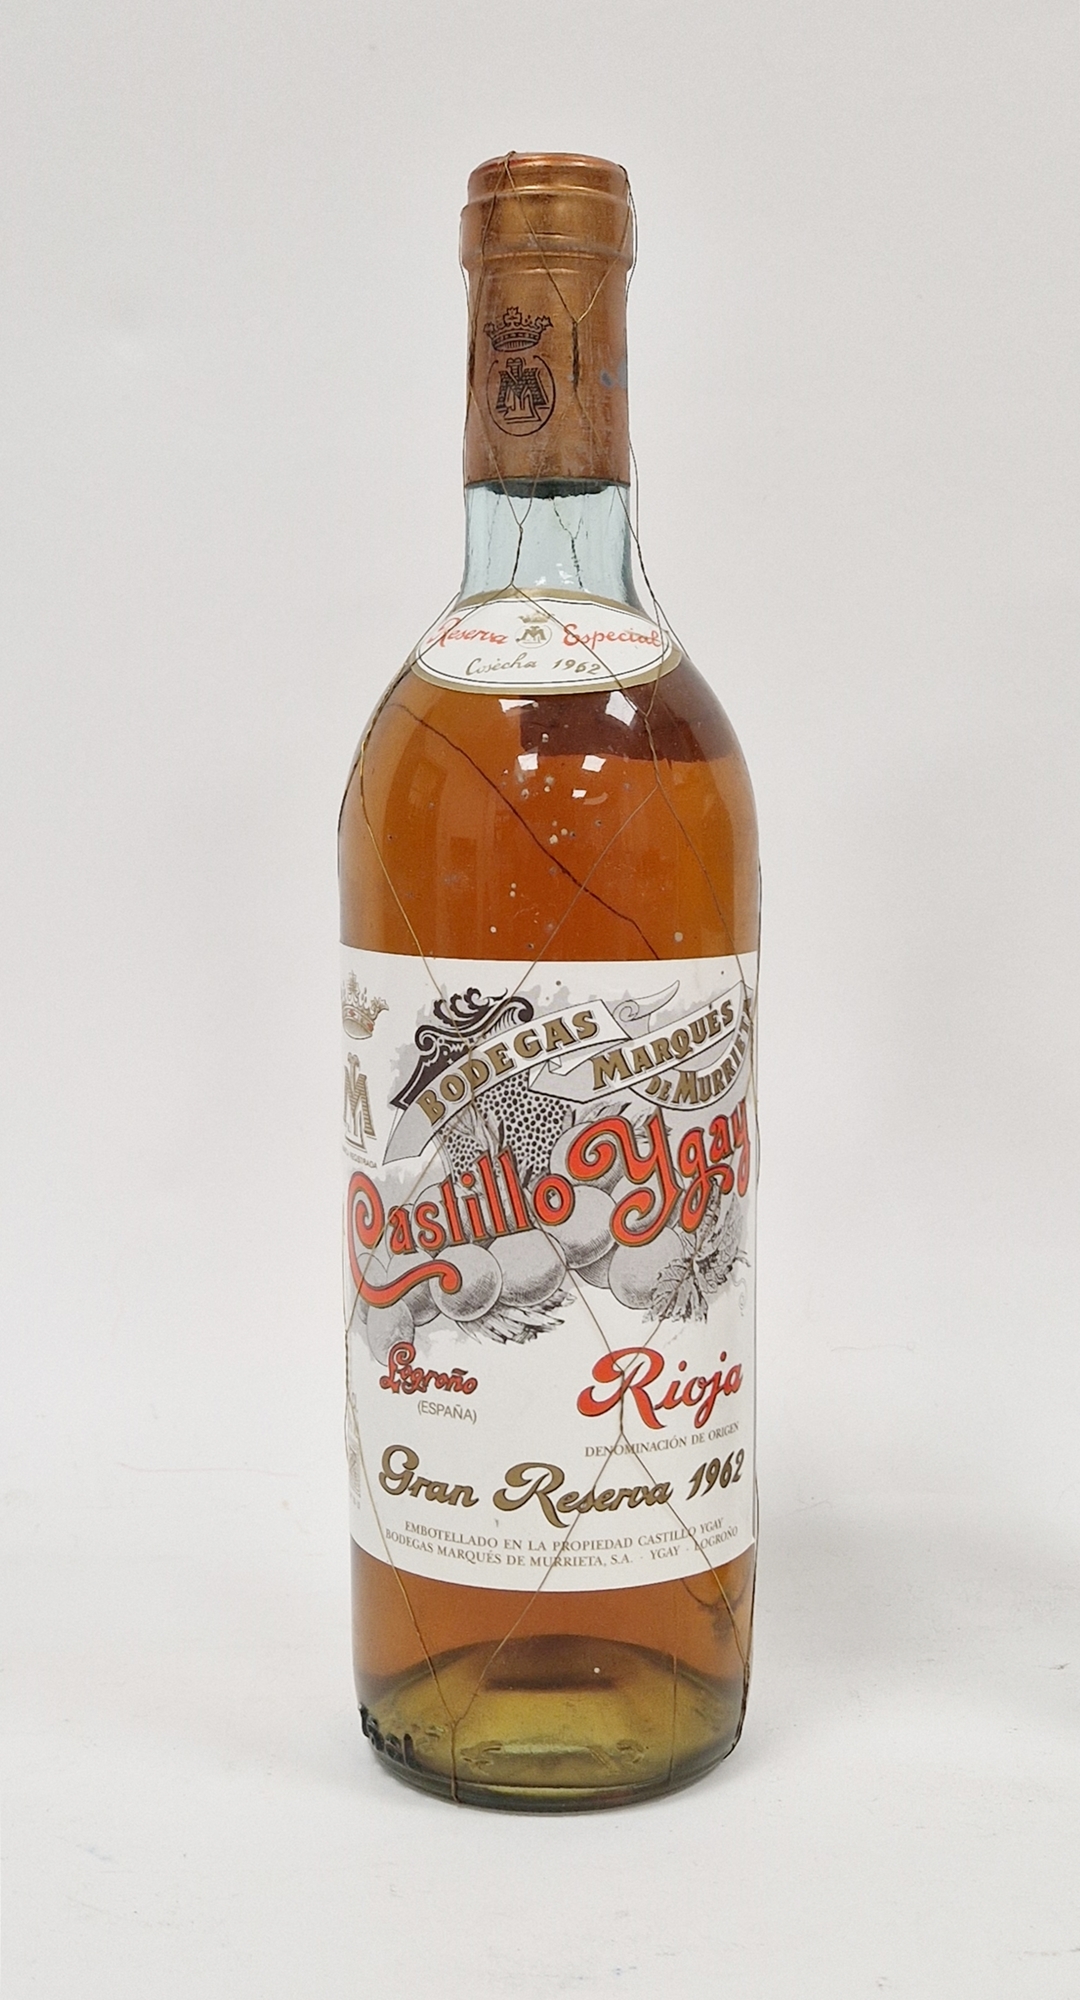 Bottle of Bodegas Marques de Murrieta Castillo Ygay Gran Reserva 1962 rioja (low neck)  Condition